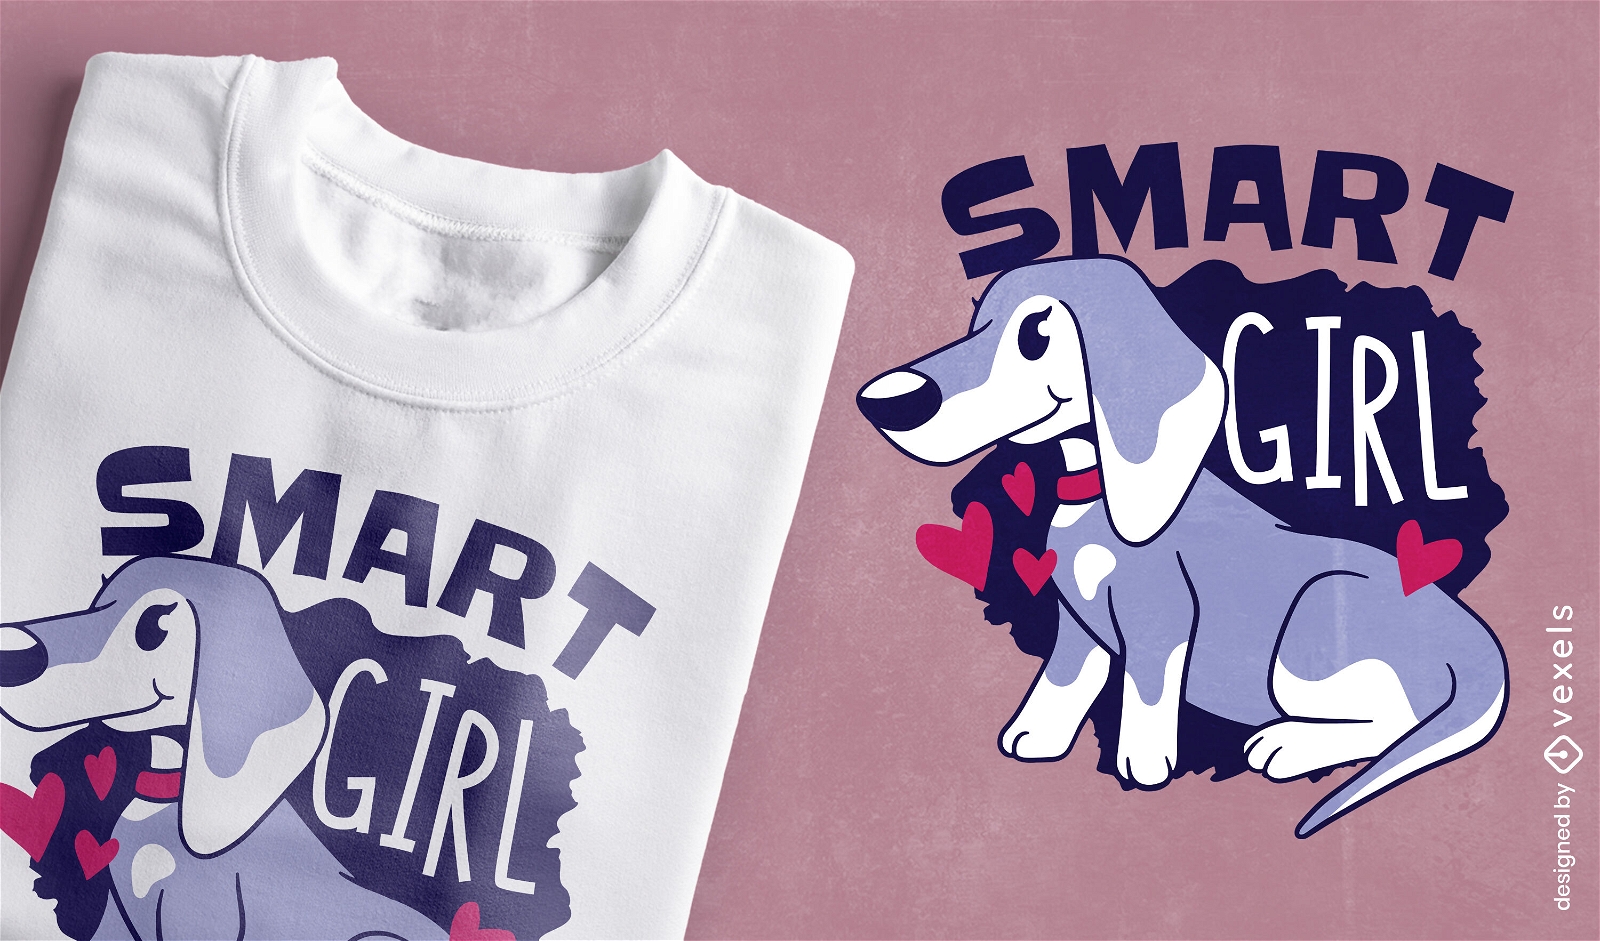 Smart girl dachshunds dog t-shirt design